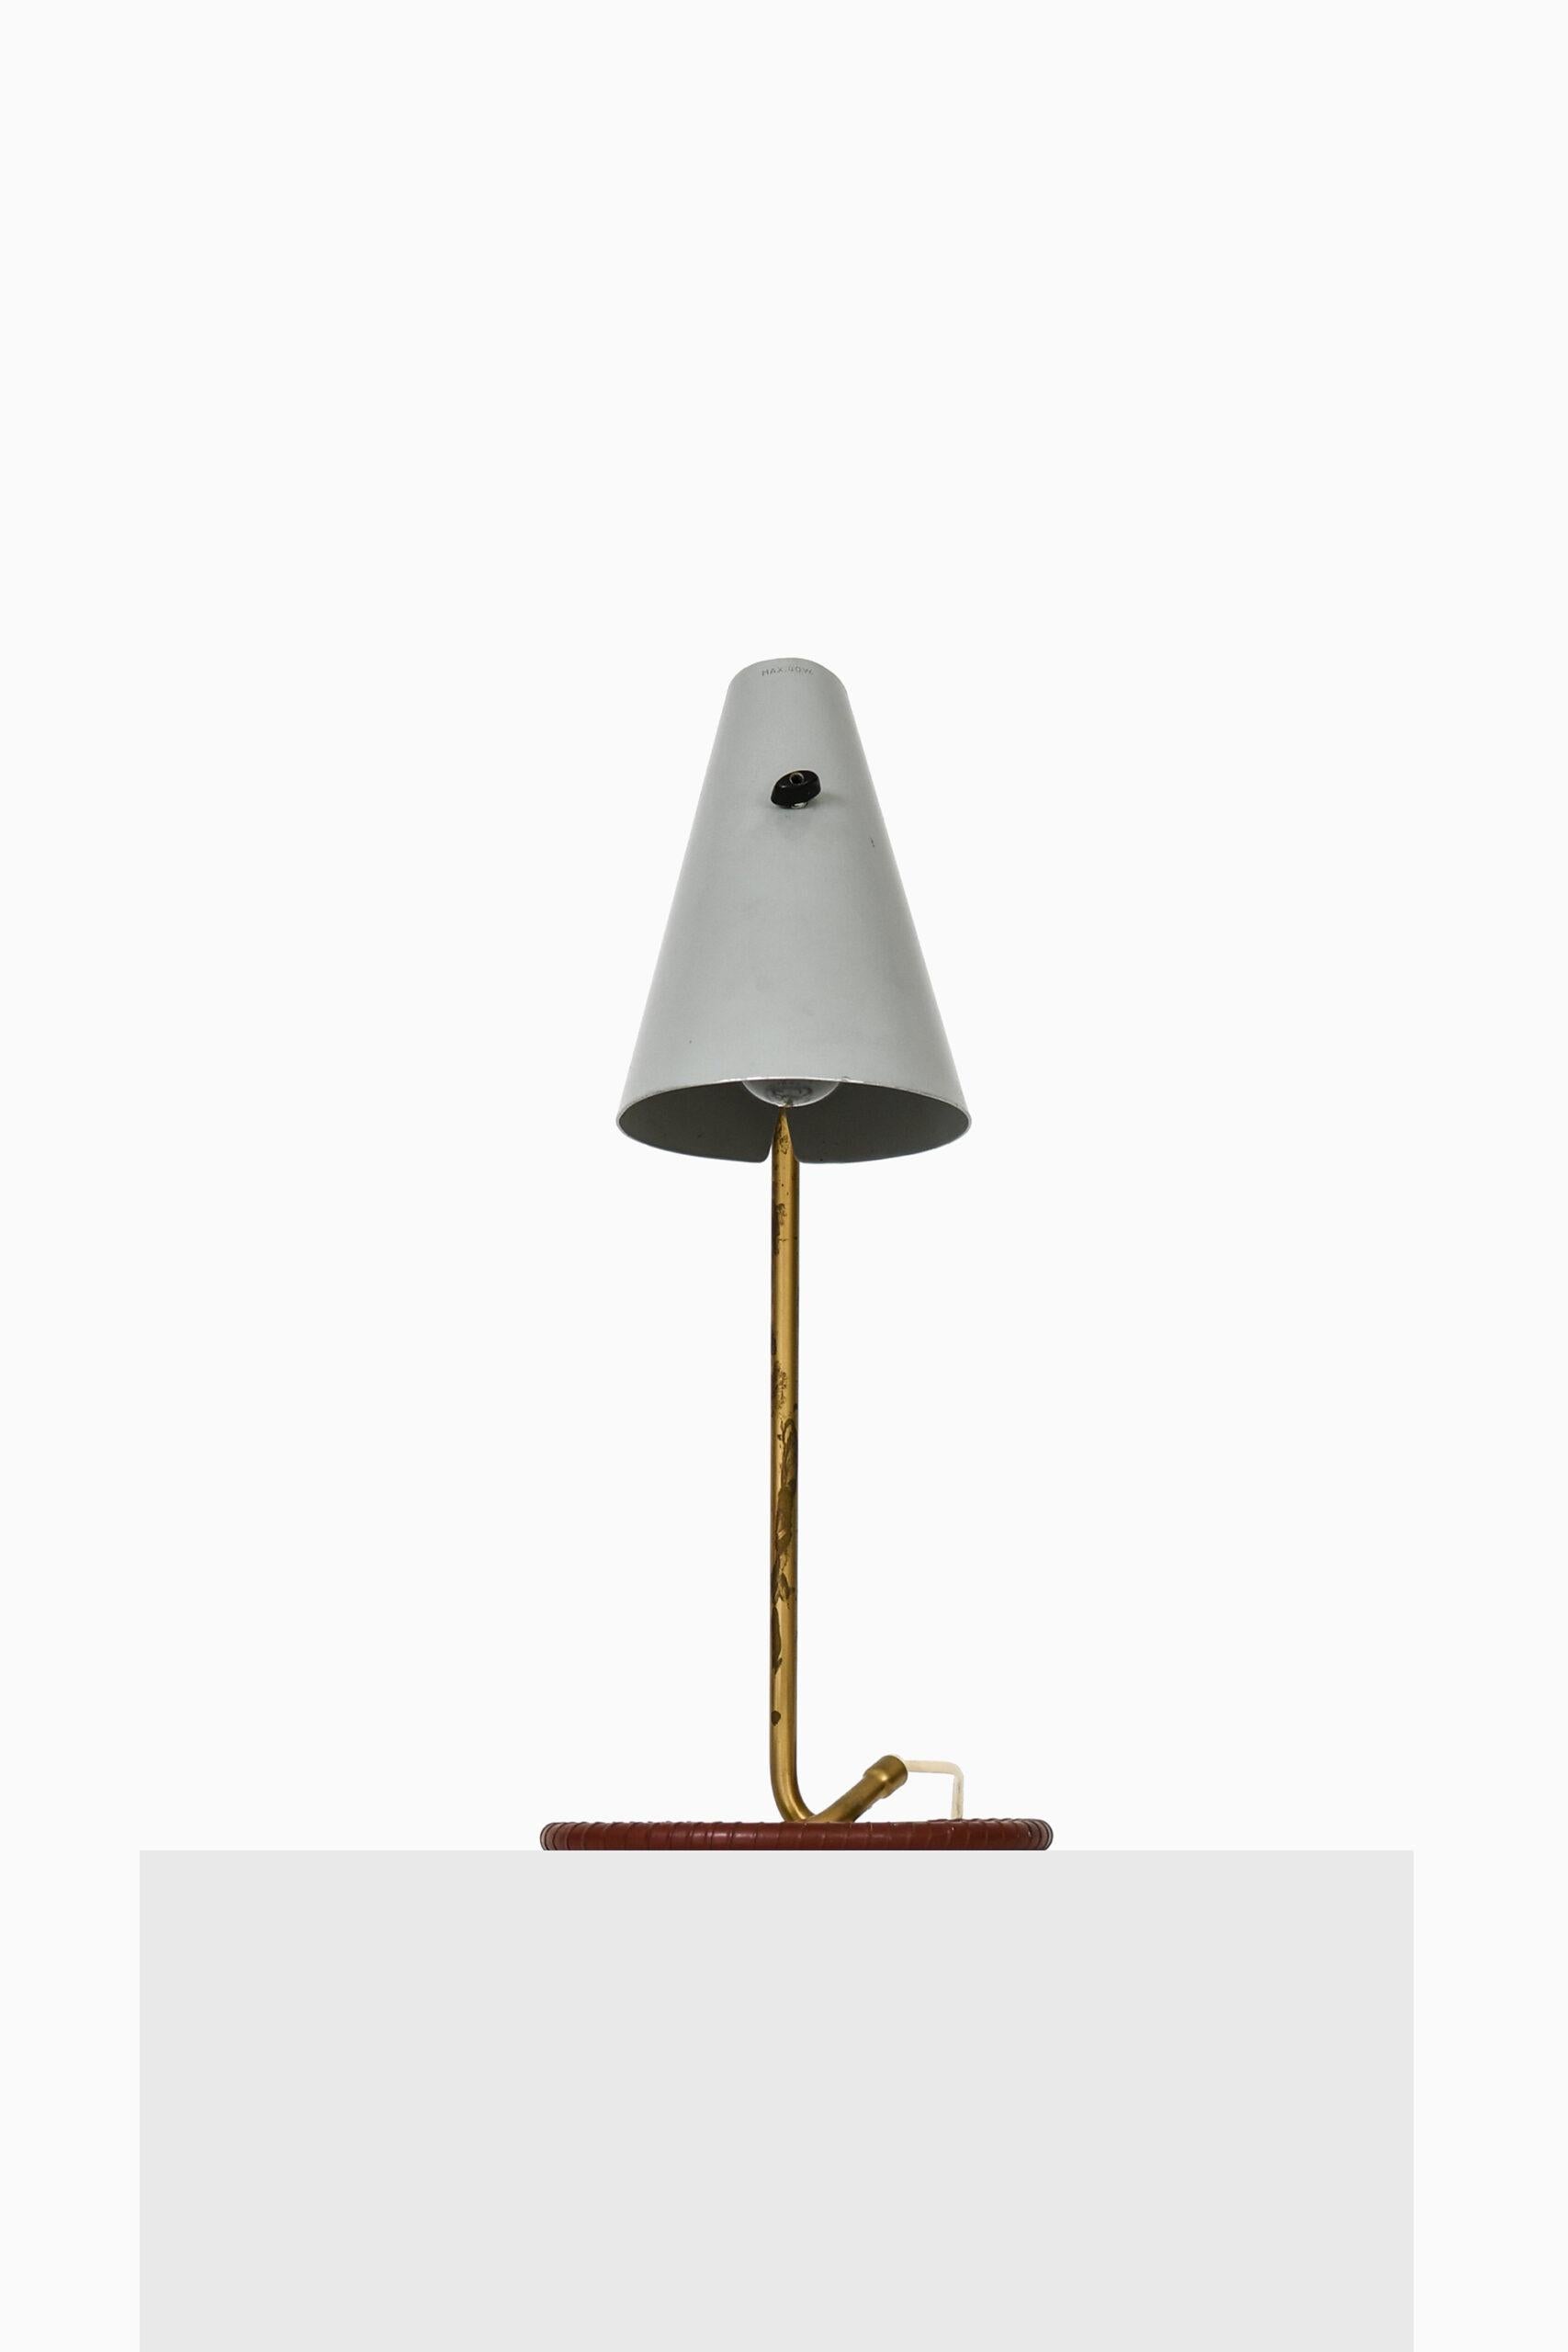 Rare table lamp model 711 designed by Hans Bergström. Produced by Ateljé Lyktan in Åhus, Sweden.